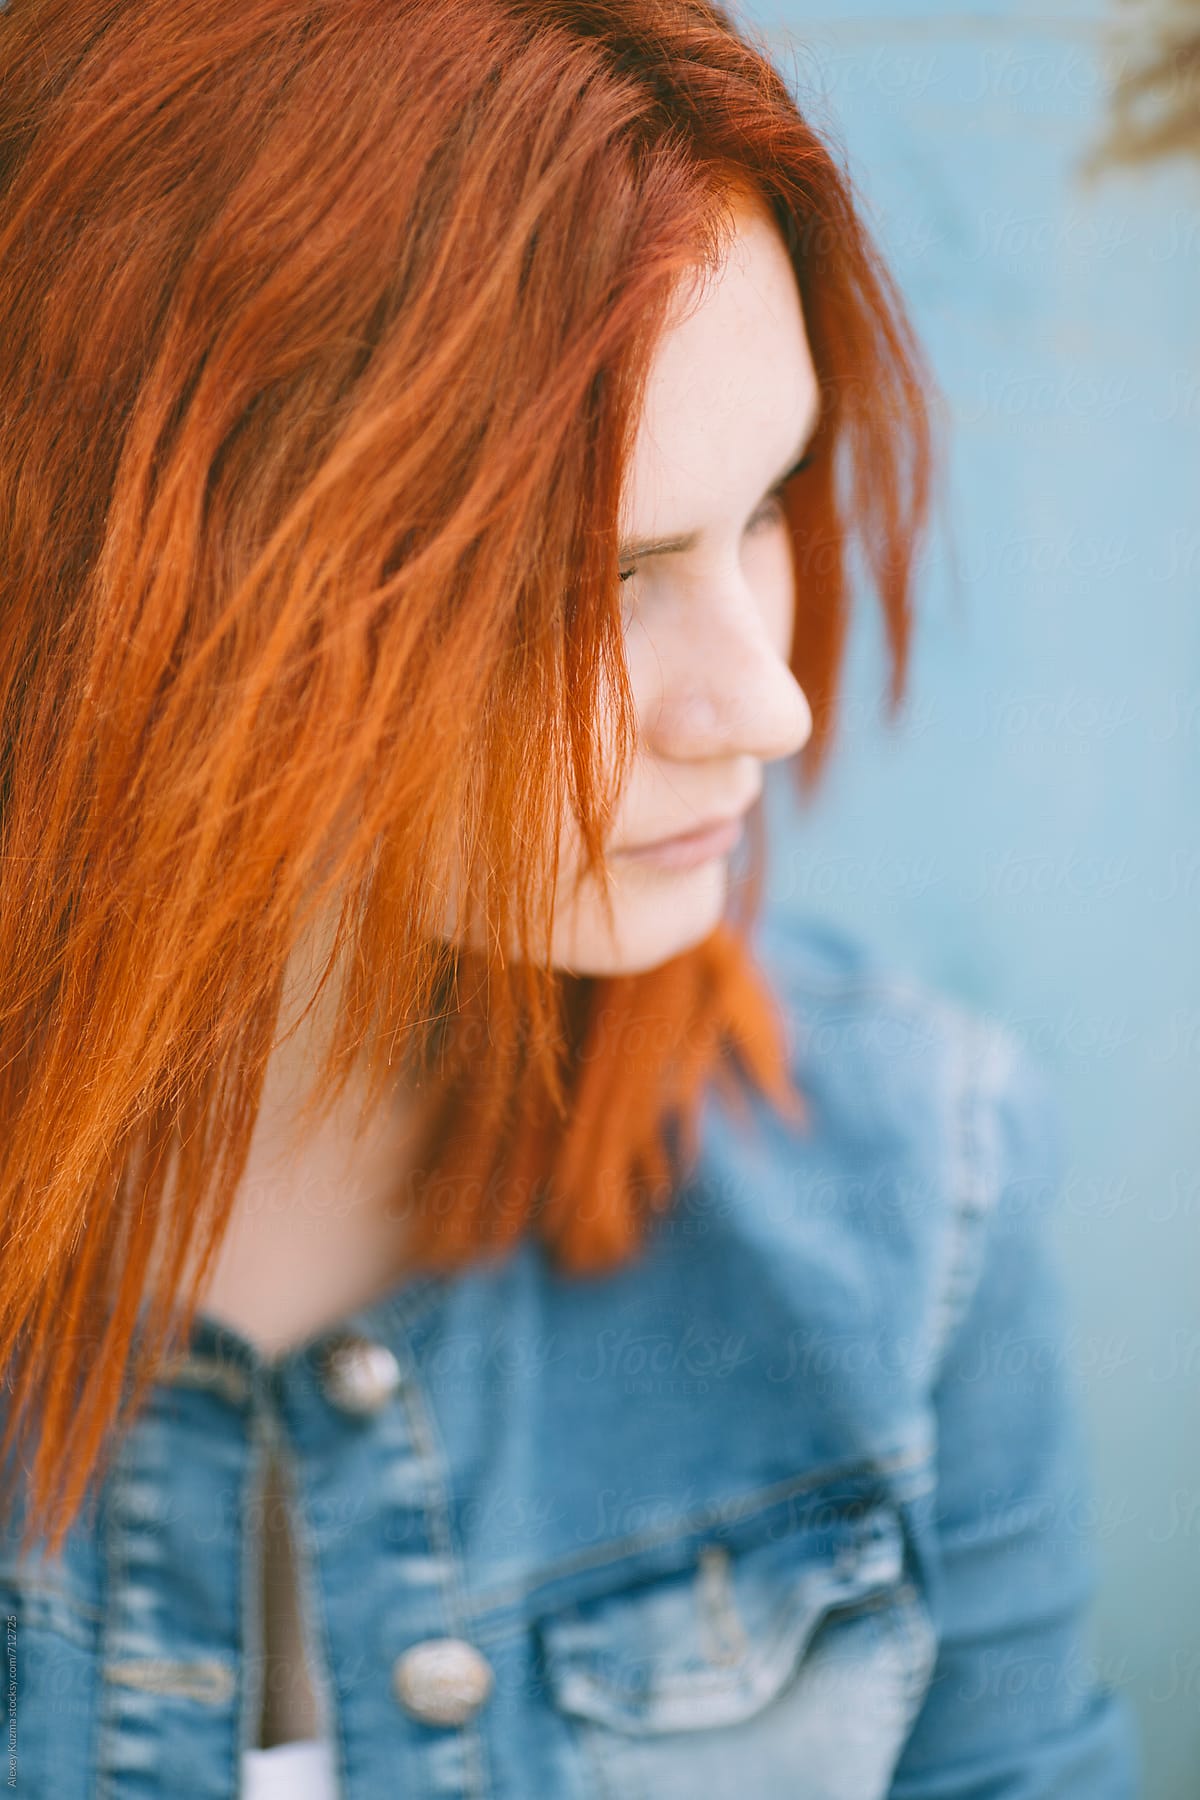 Woman With Red Hair By Stocksy Contributor Alexey Kuzma Stocksy